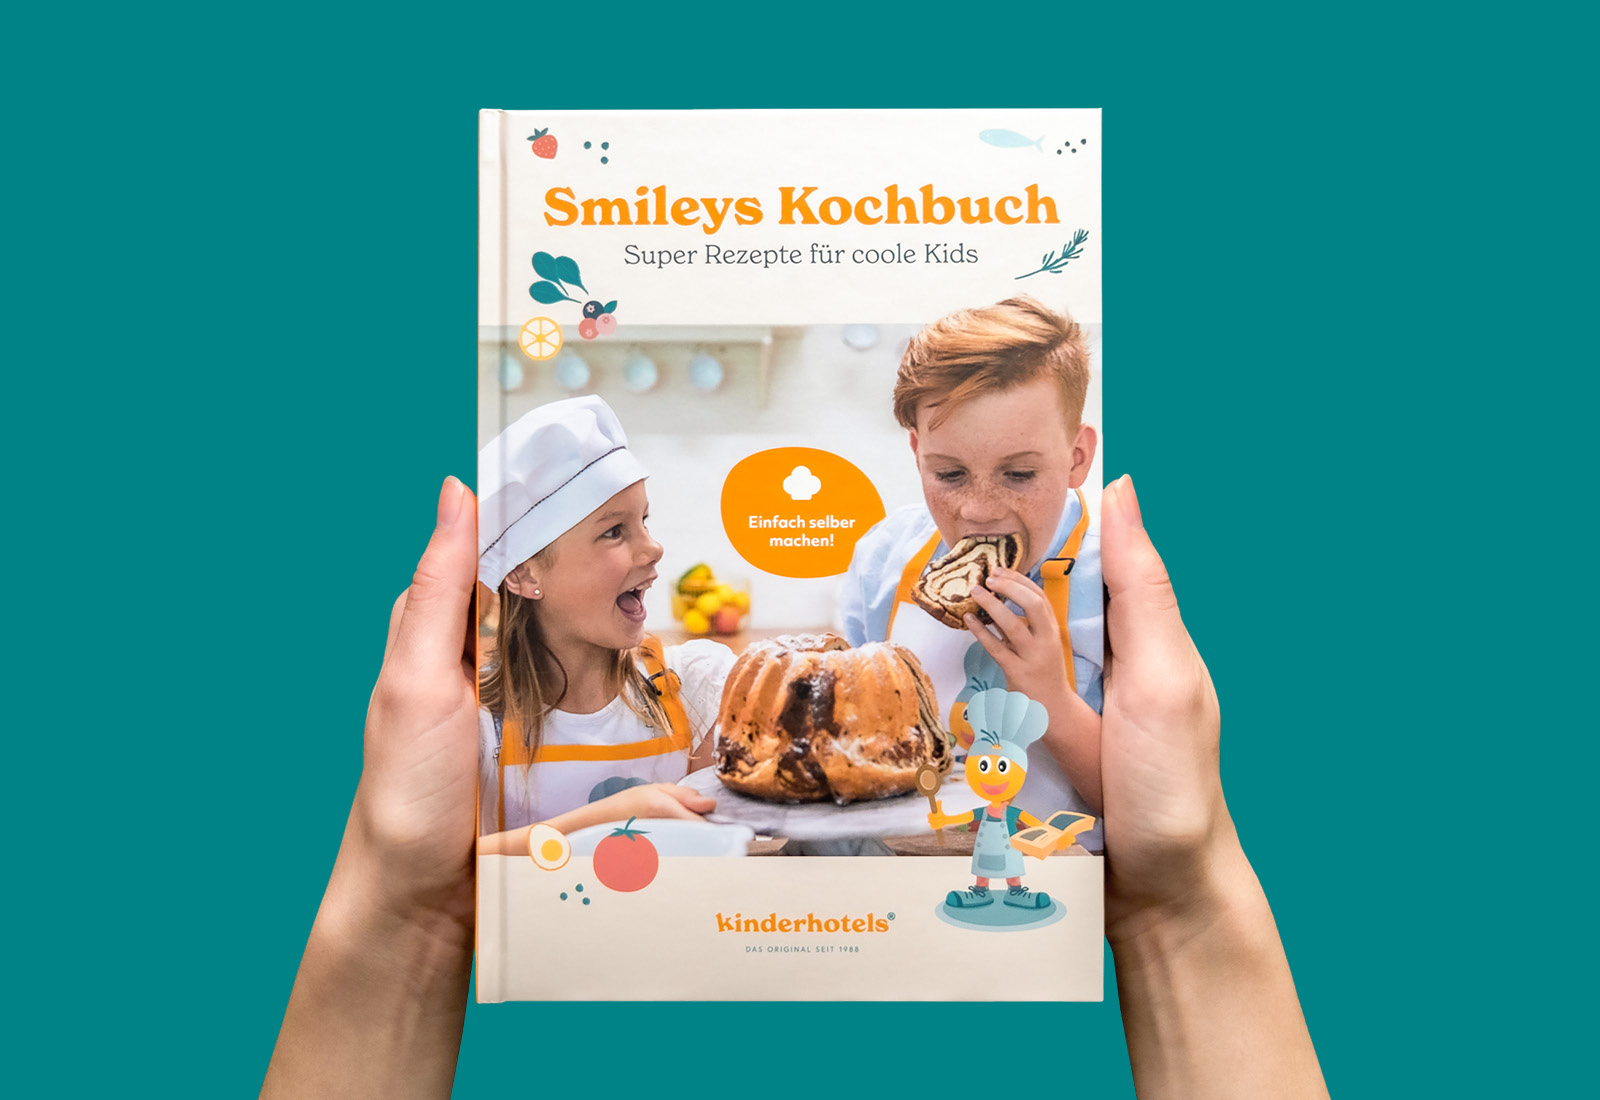 Sally's book cover for koobbosch features Kinderhotels.